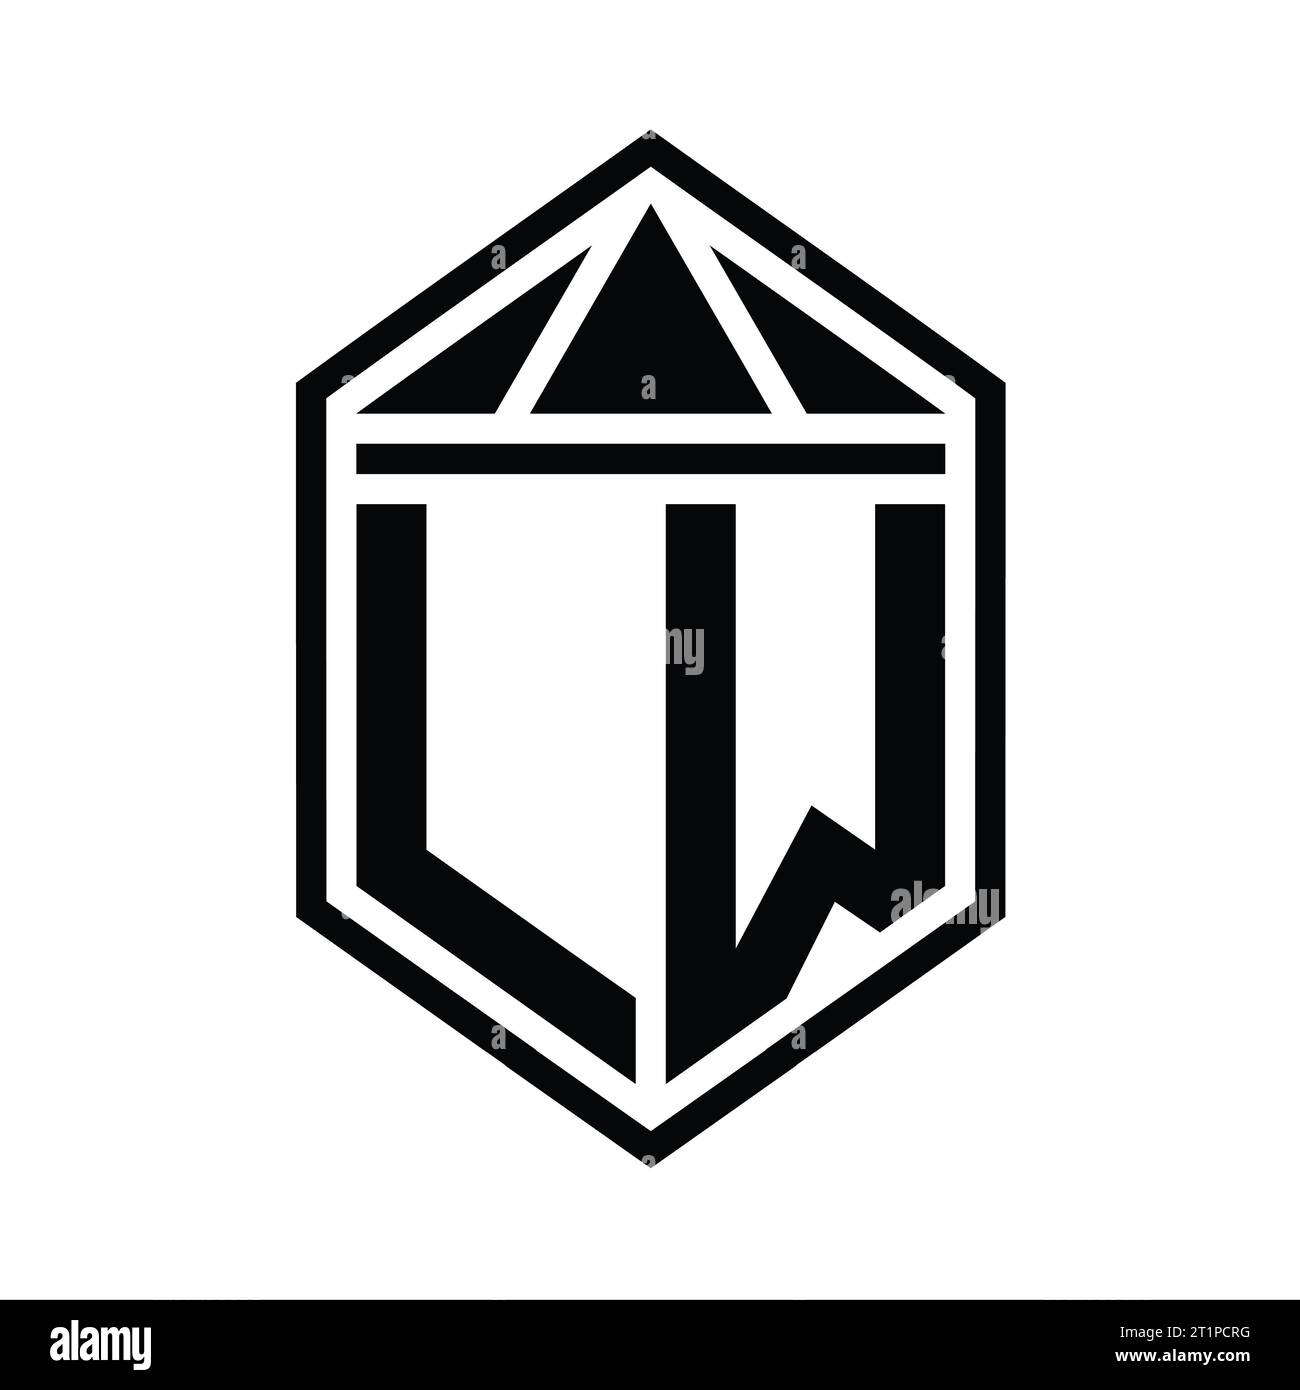 Free Louis vuitton Logo Icon - Download in Flat Style